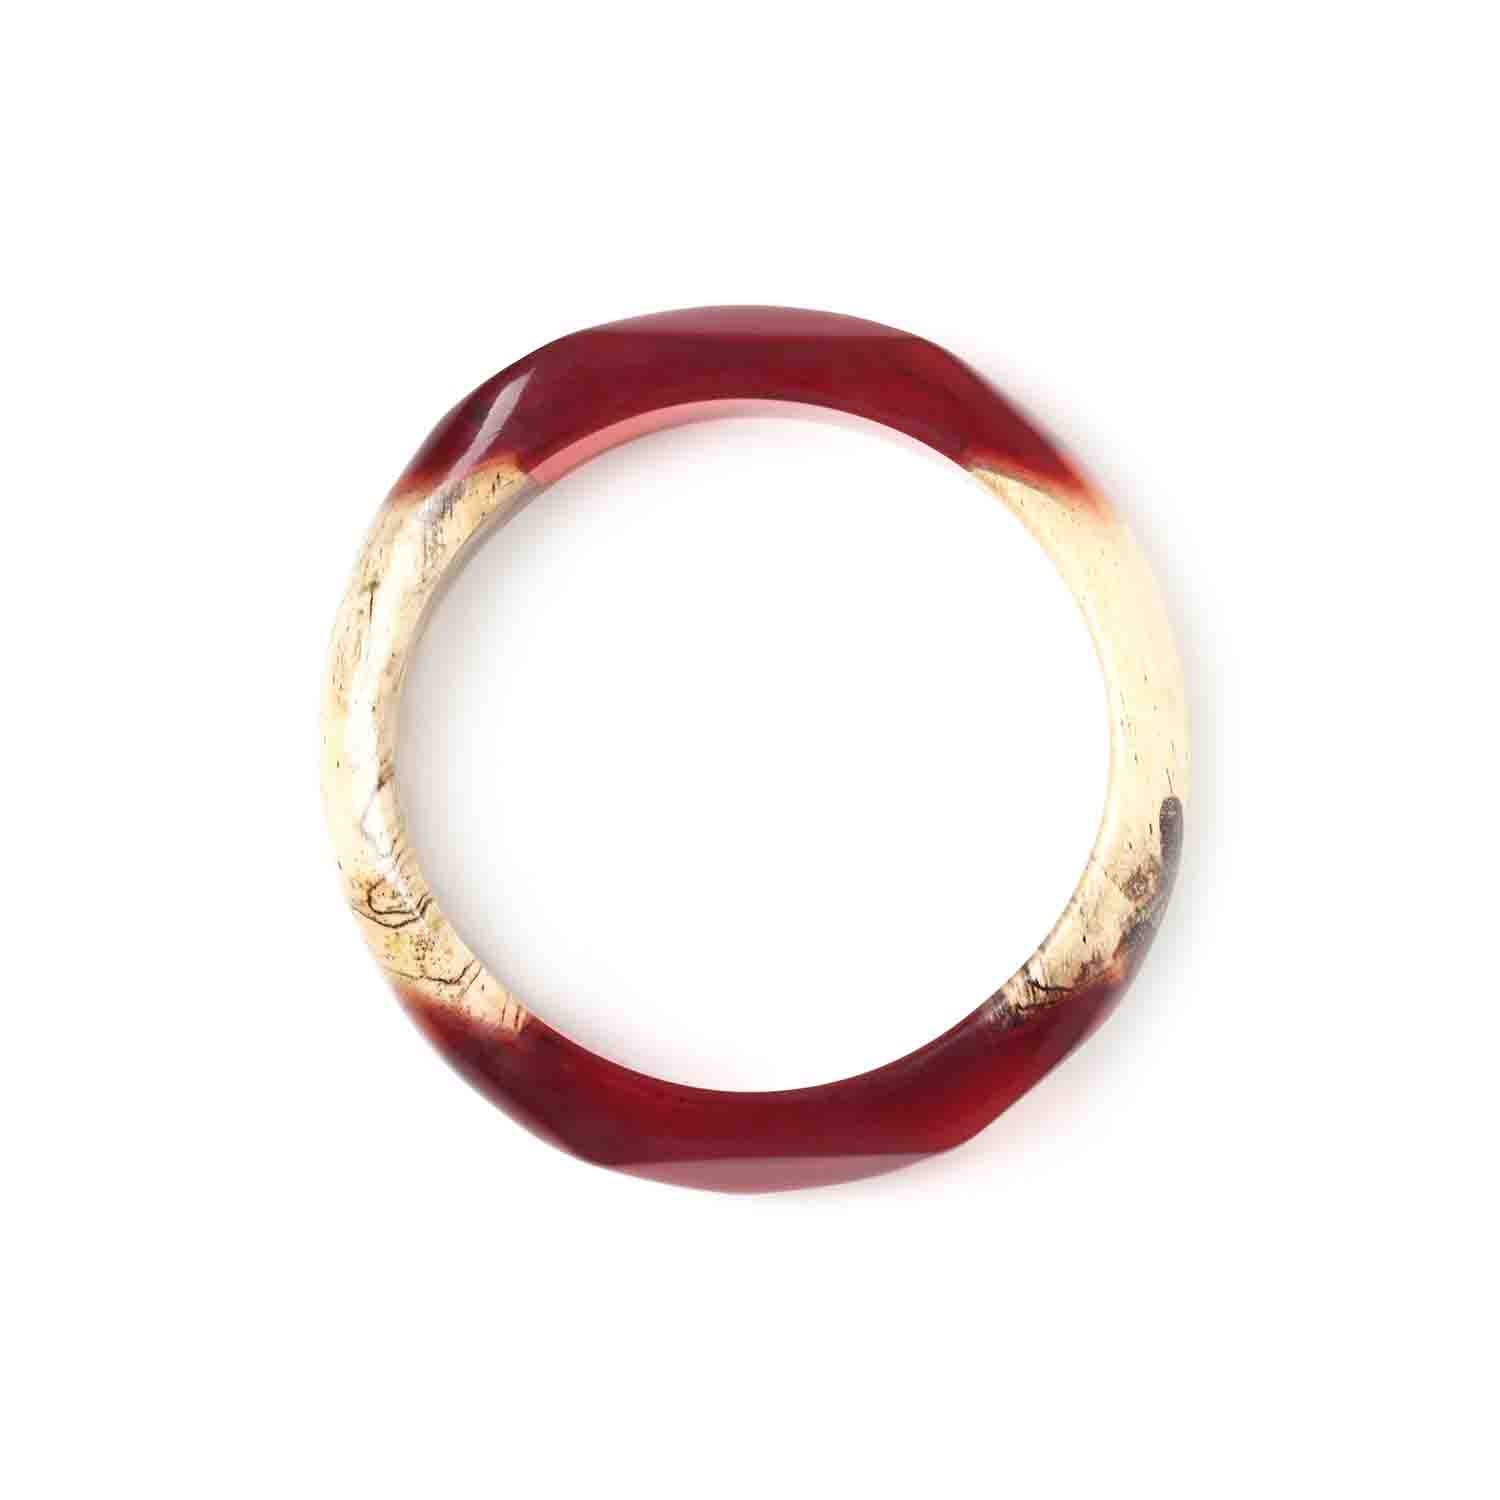 Nature Bijoux Bangle Bracelet / Tamarind, Eco Resin / Red, Beige / Natural Materials / Sweet Amber - 0